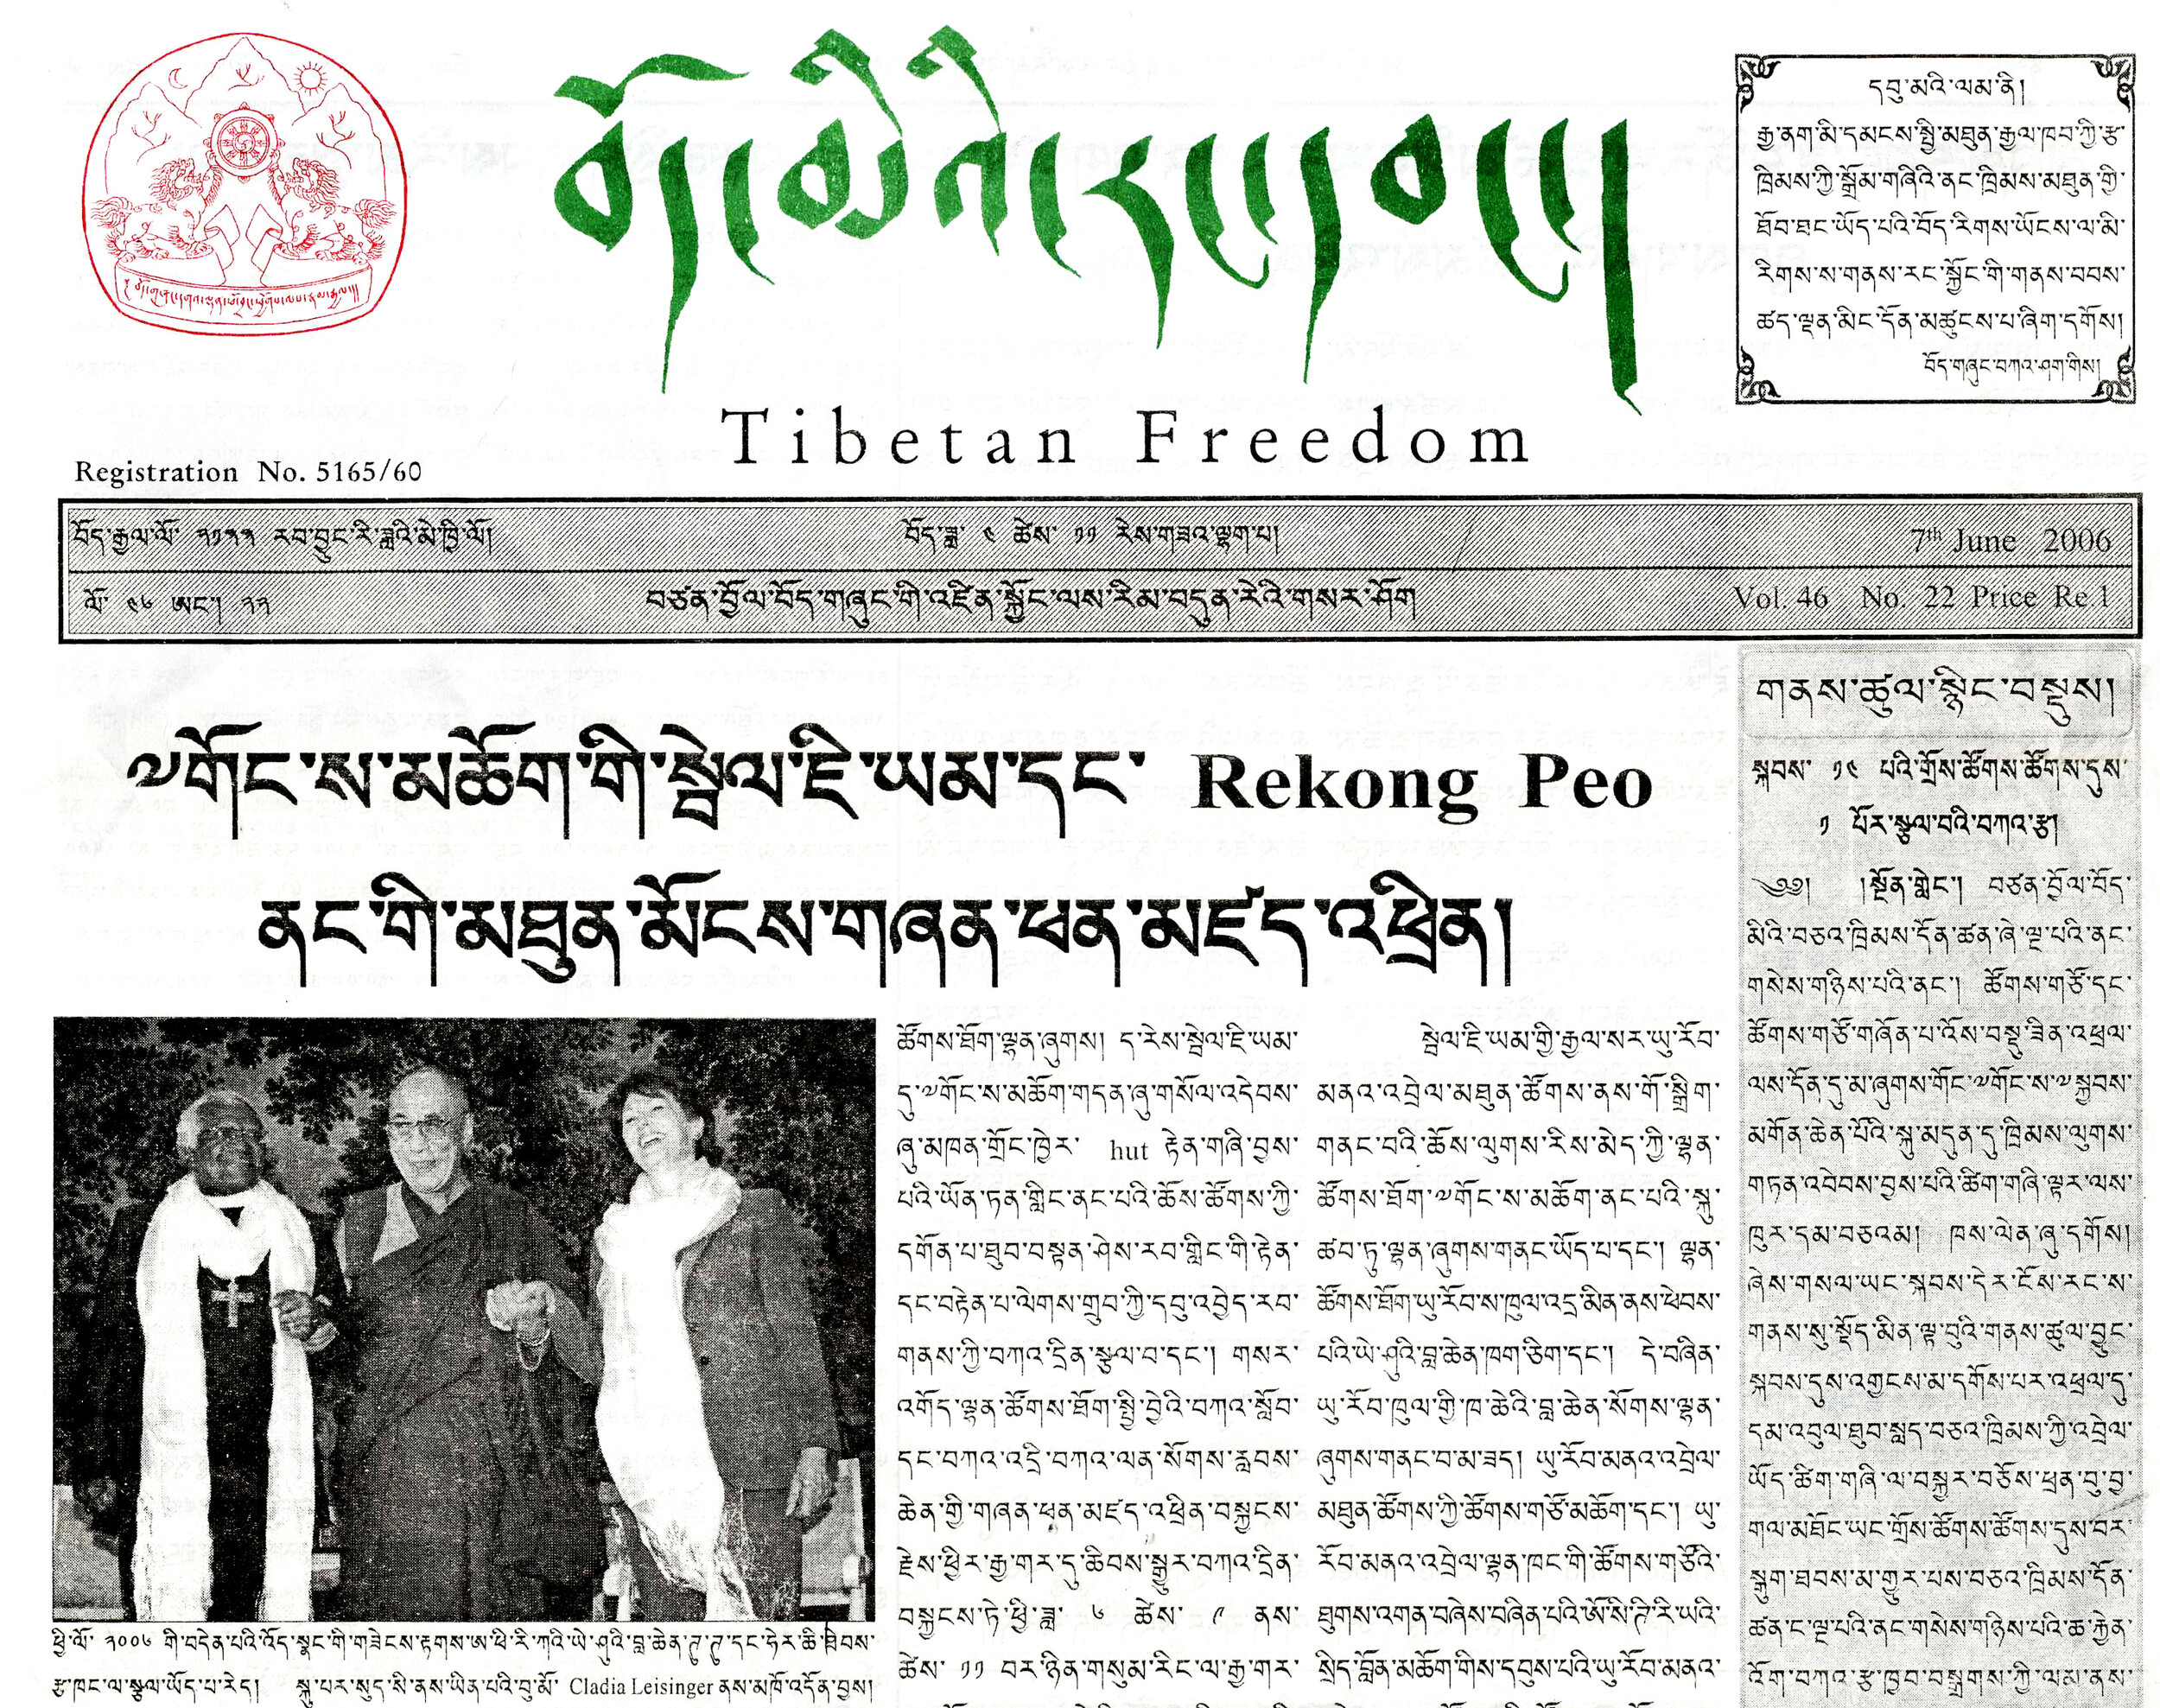 The Dalai Lama & Desmond Tutu for Tibetan Freedom32.jpg